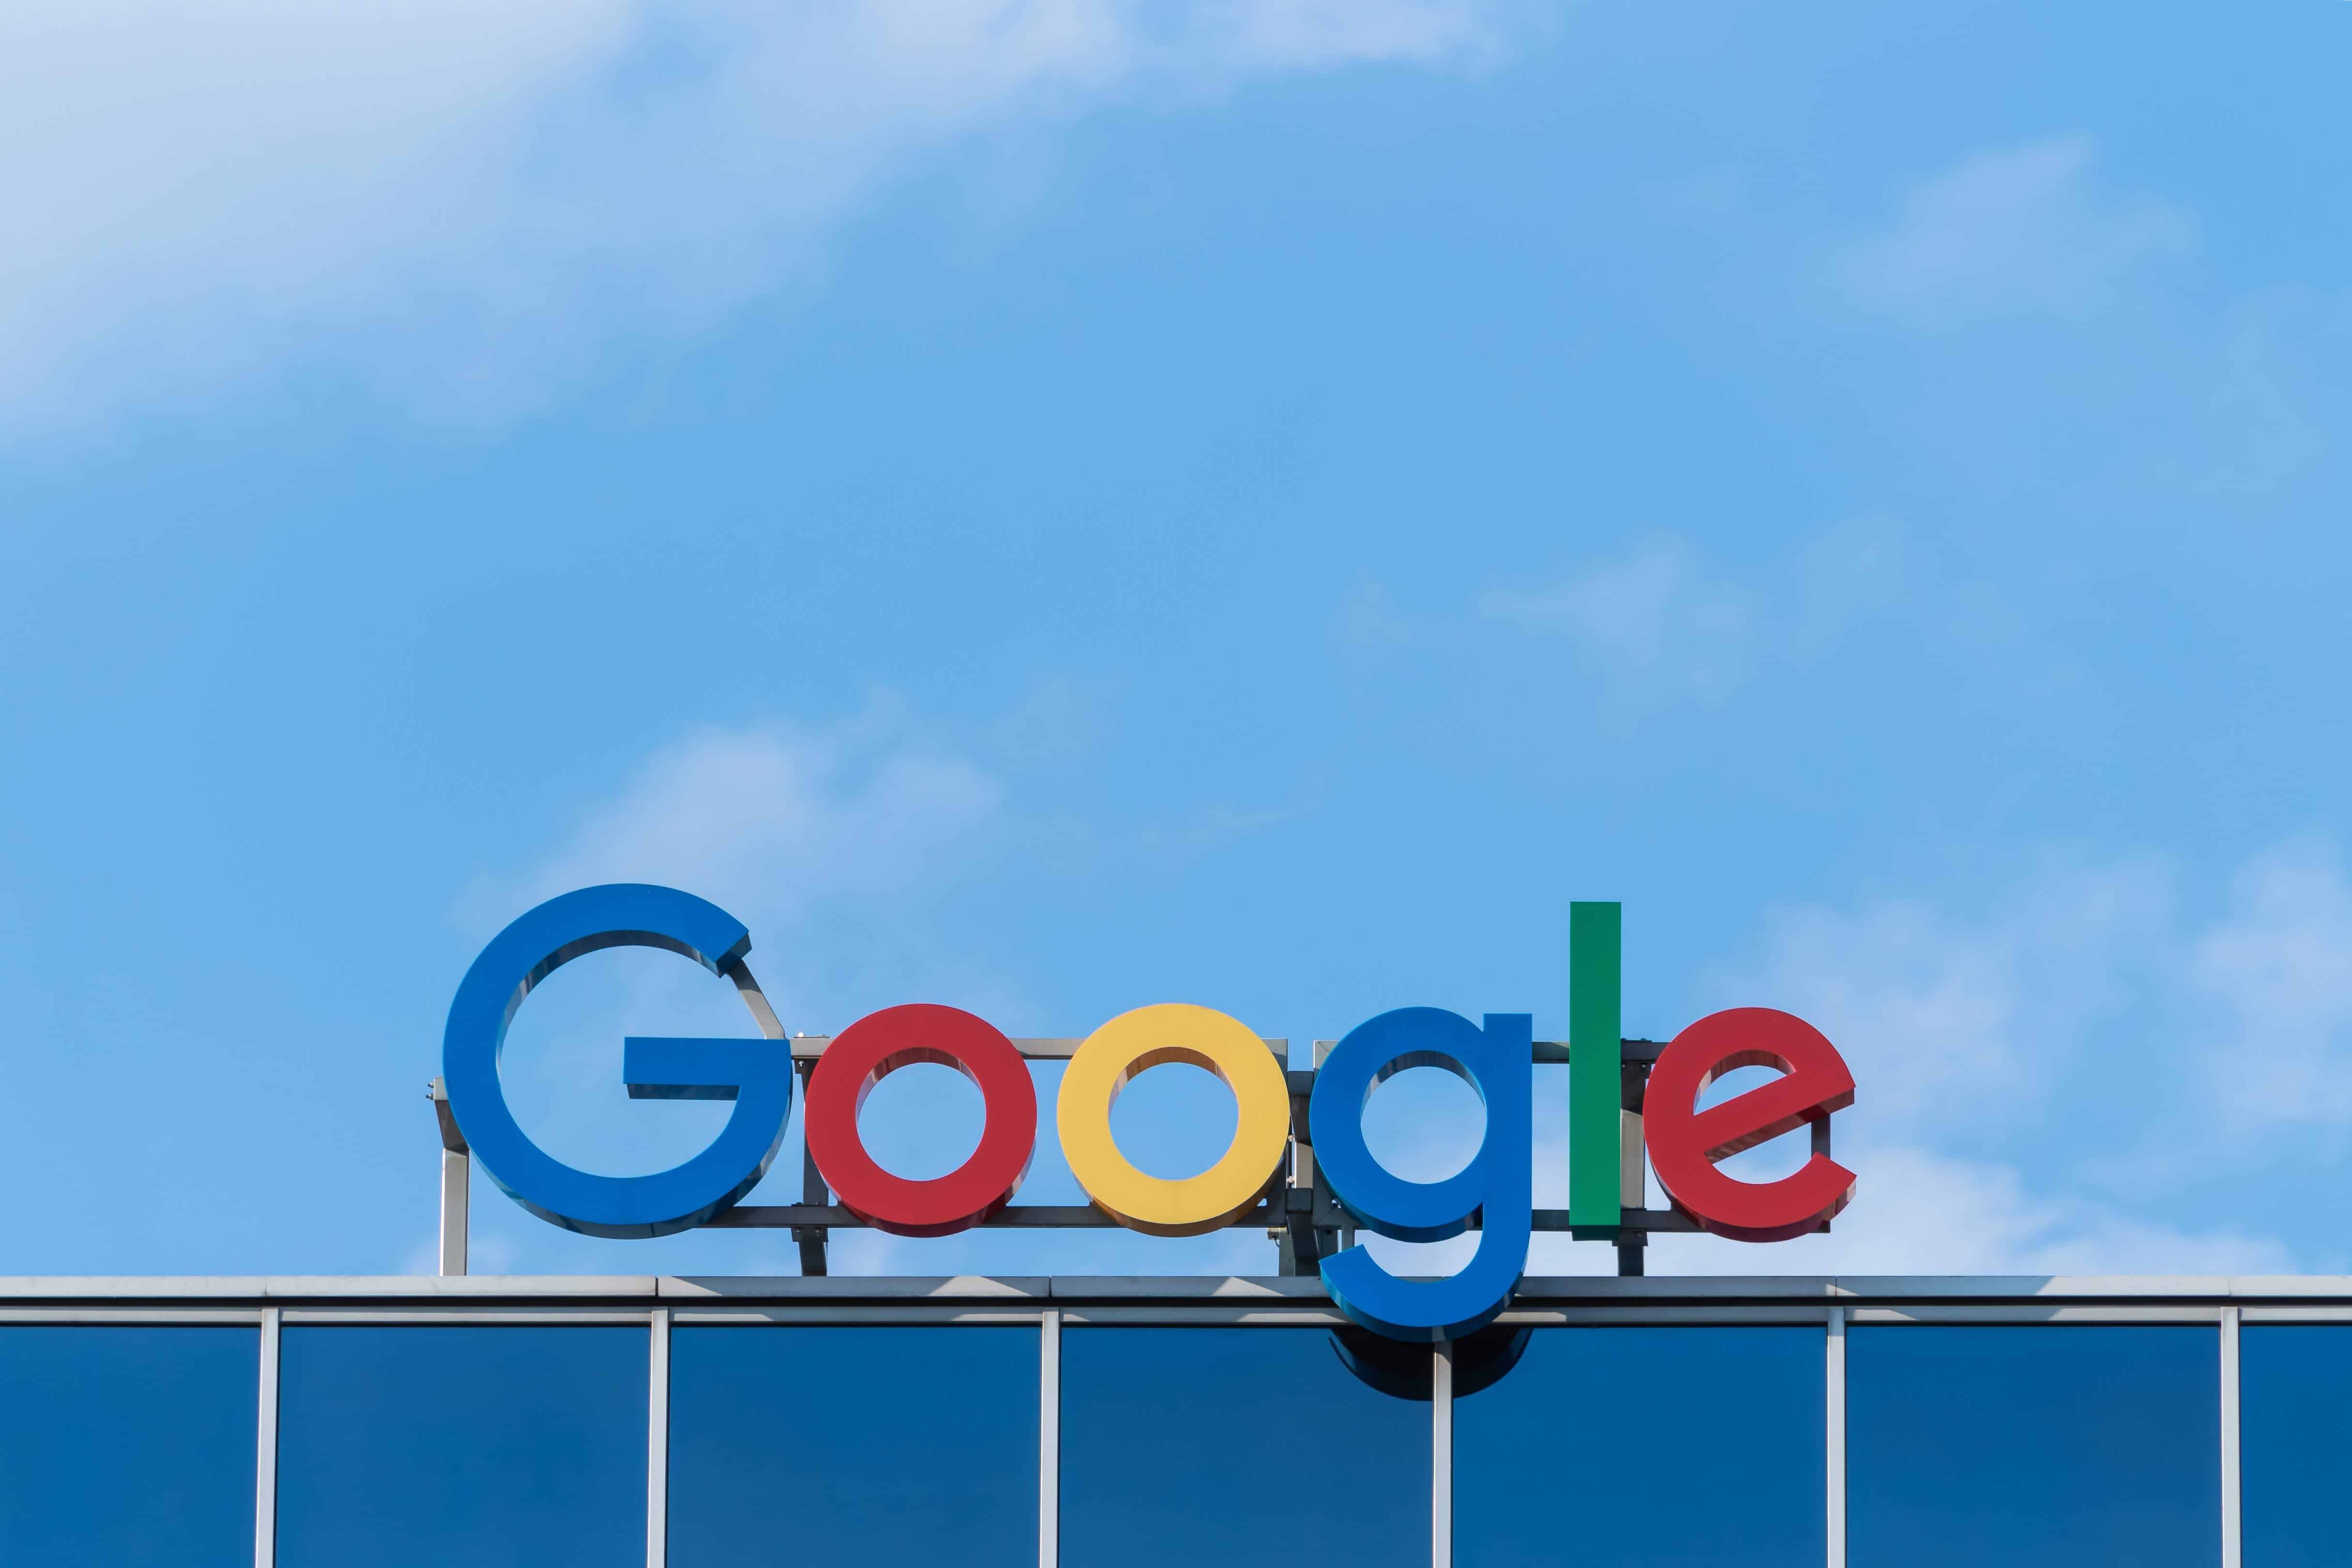 google dnes oslavuje 20 rokov! - pawel czerwinski 710838 unsplash - Google dnes oslavuje 20 rokov!